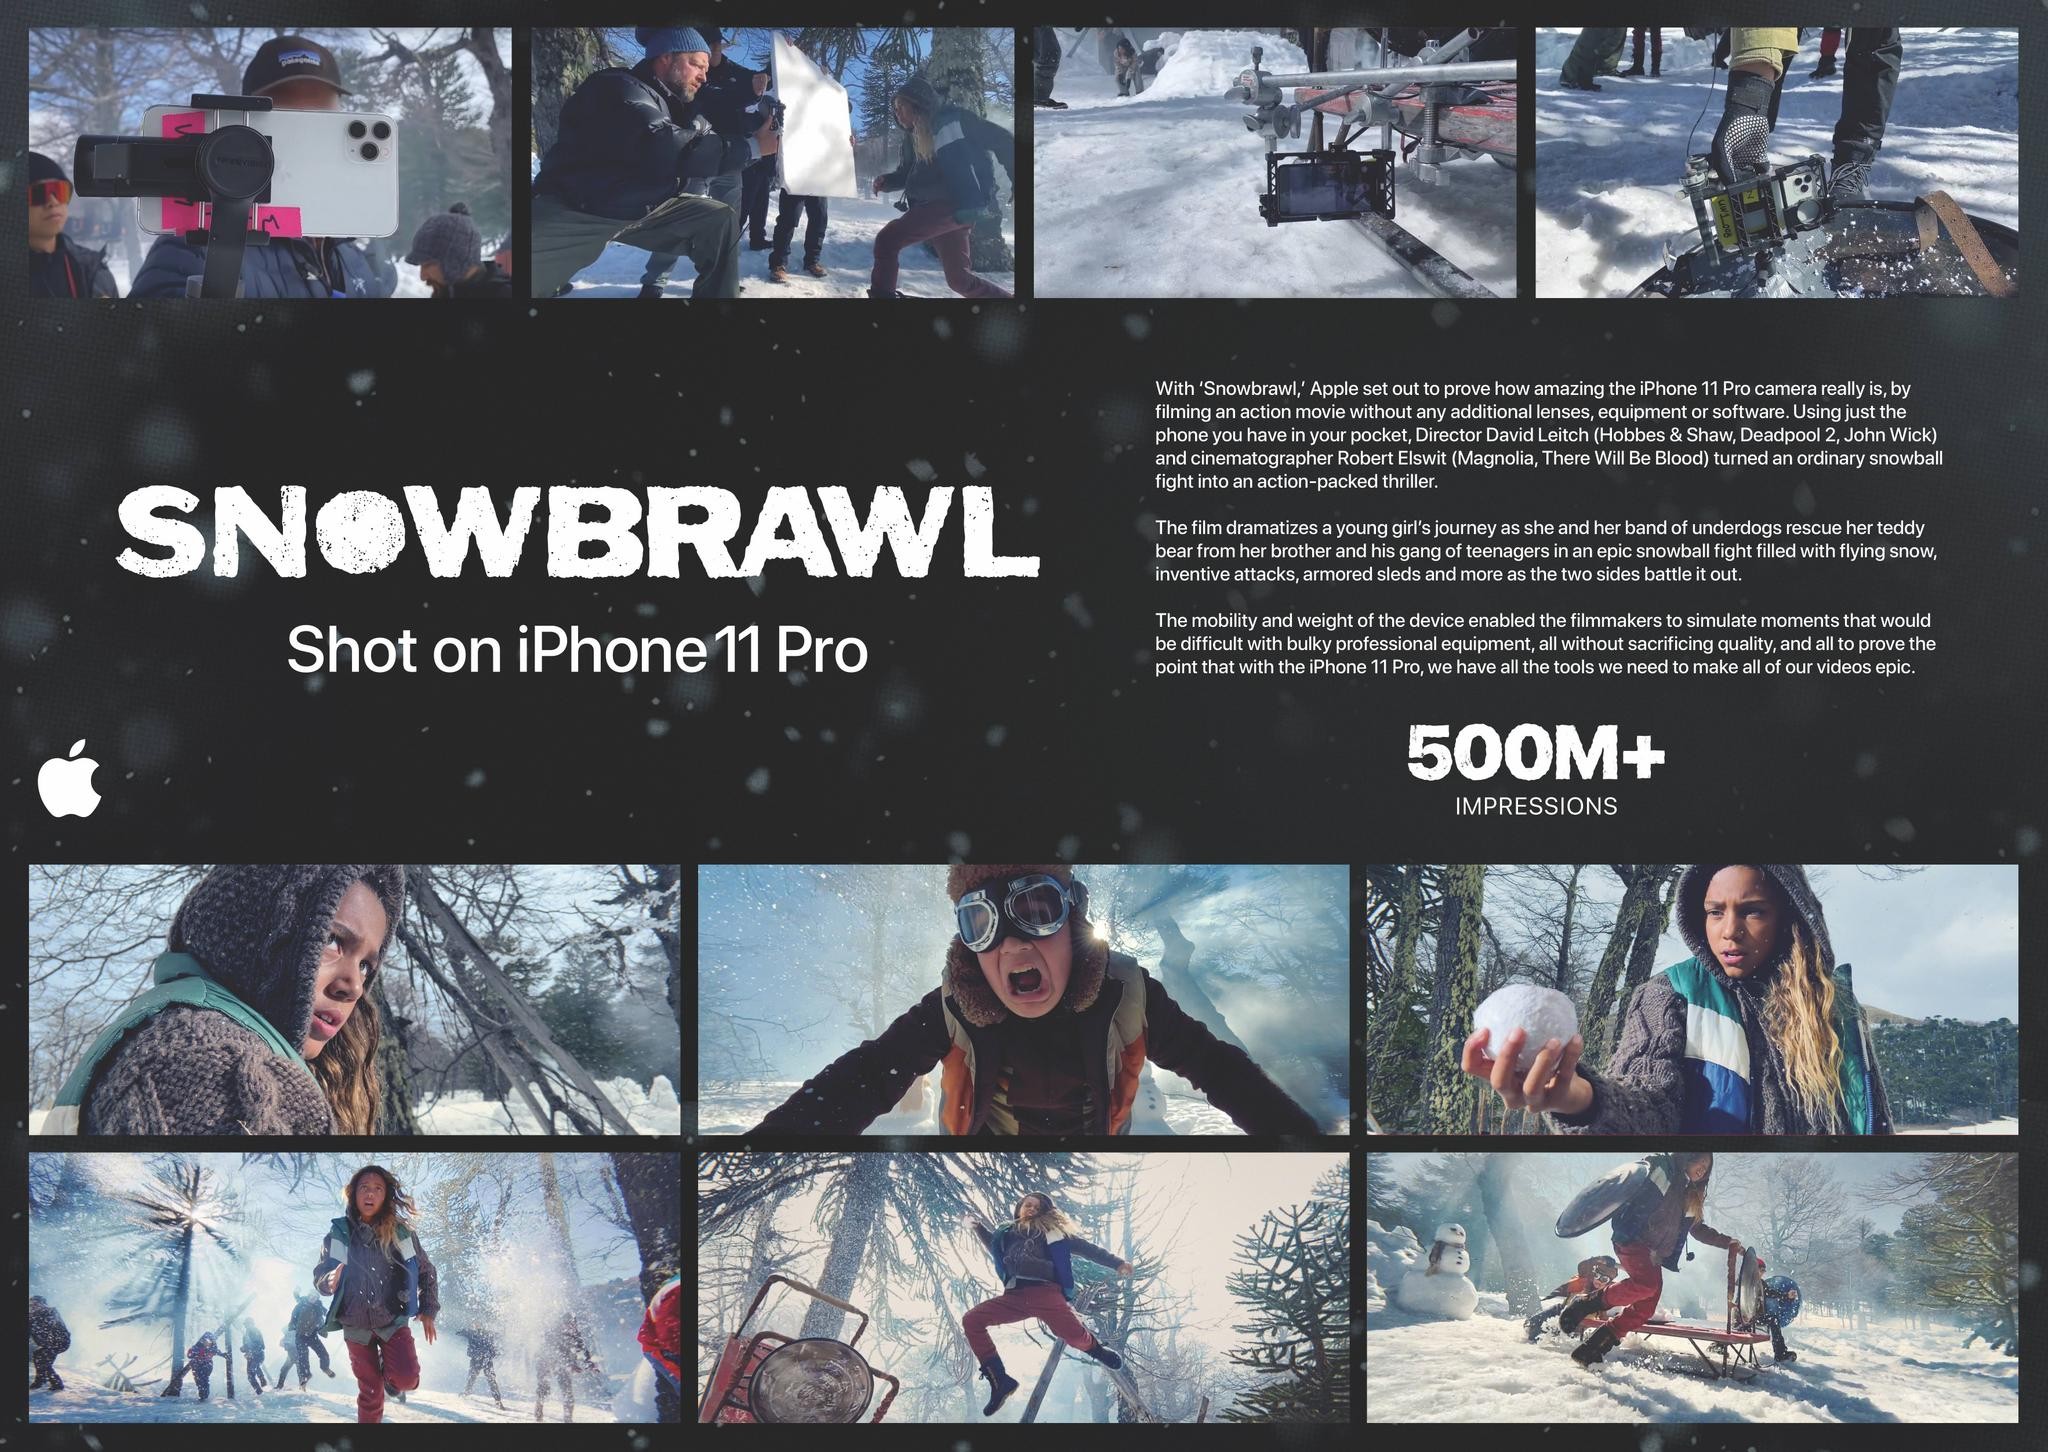 Shot on iPhone 11 Pro—Snowbrawl